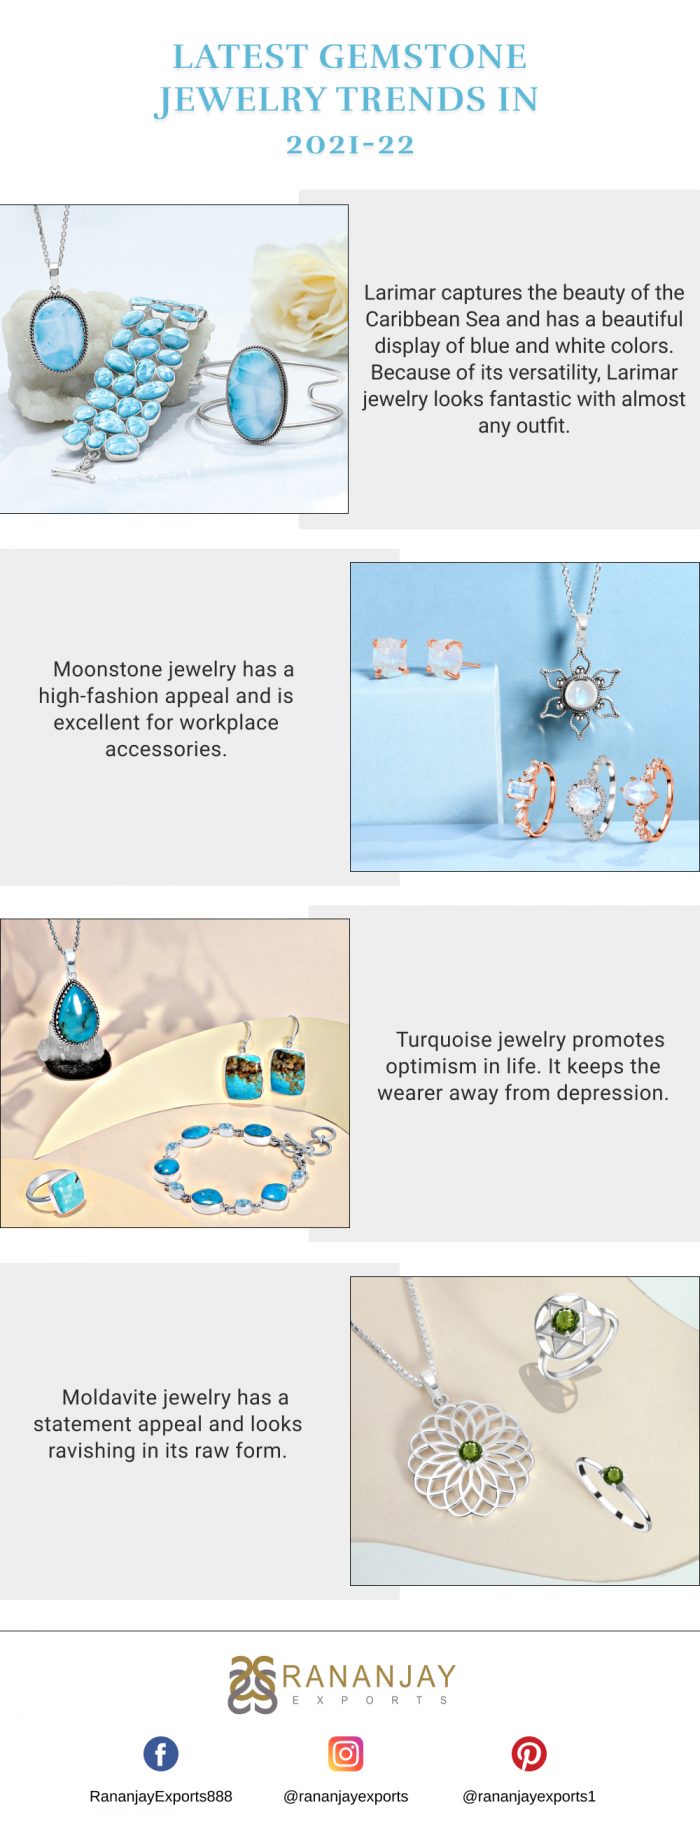 Latest Gemstone Jewelry Trends in 2021-22